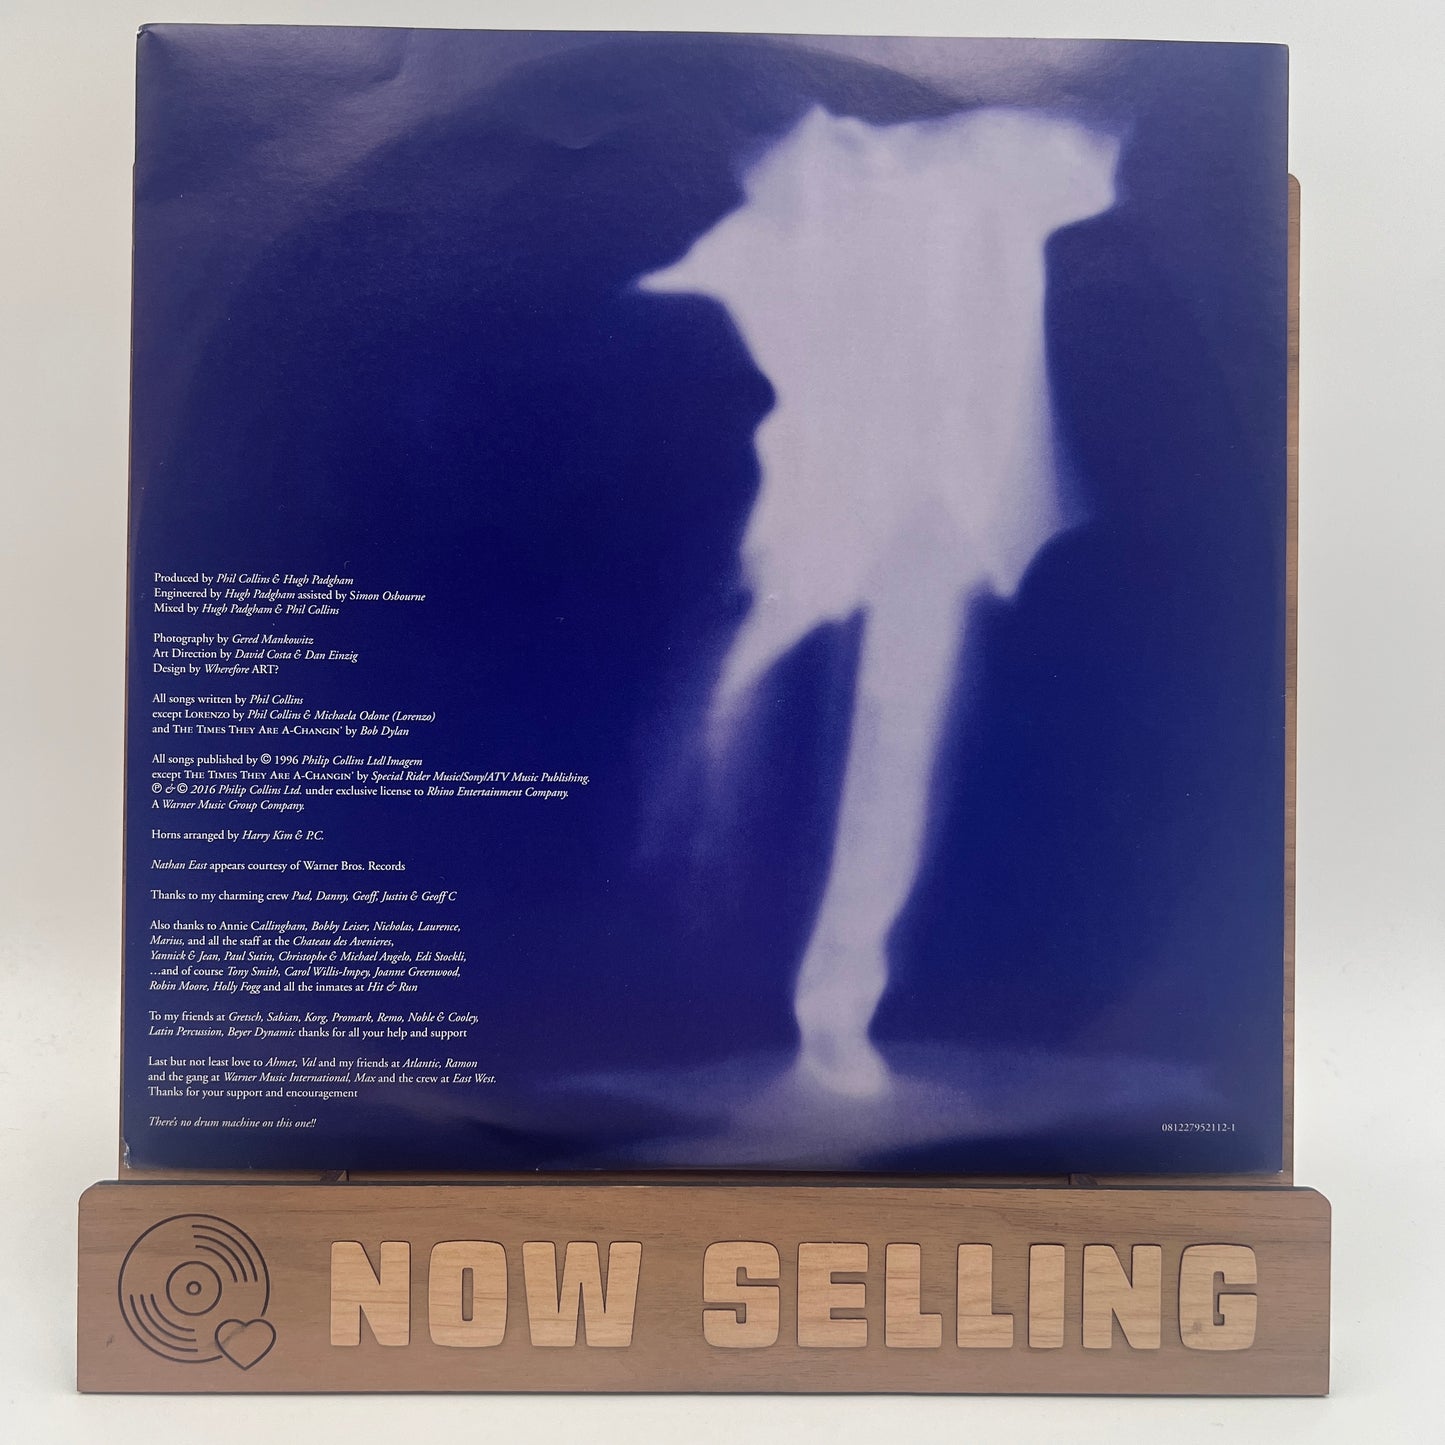 Phil Collins - Dance Into The Light Vinyl LP Reissue Remastered 180 Gram